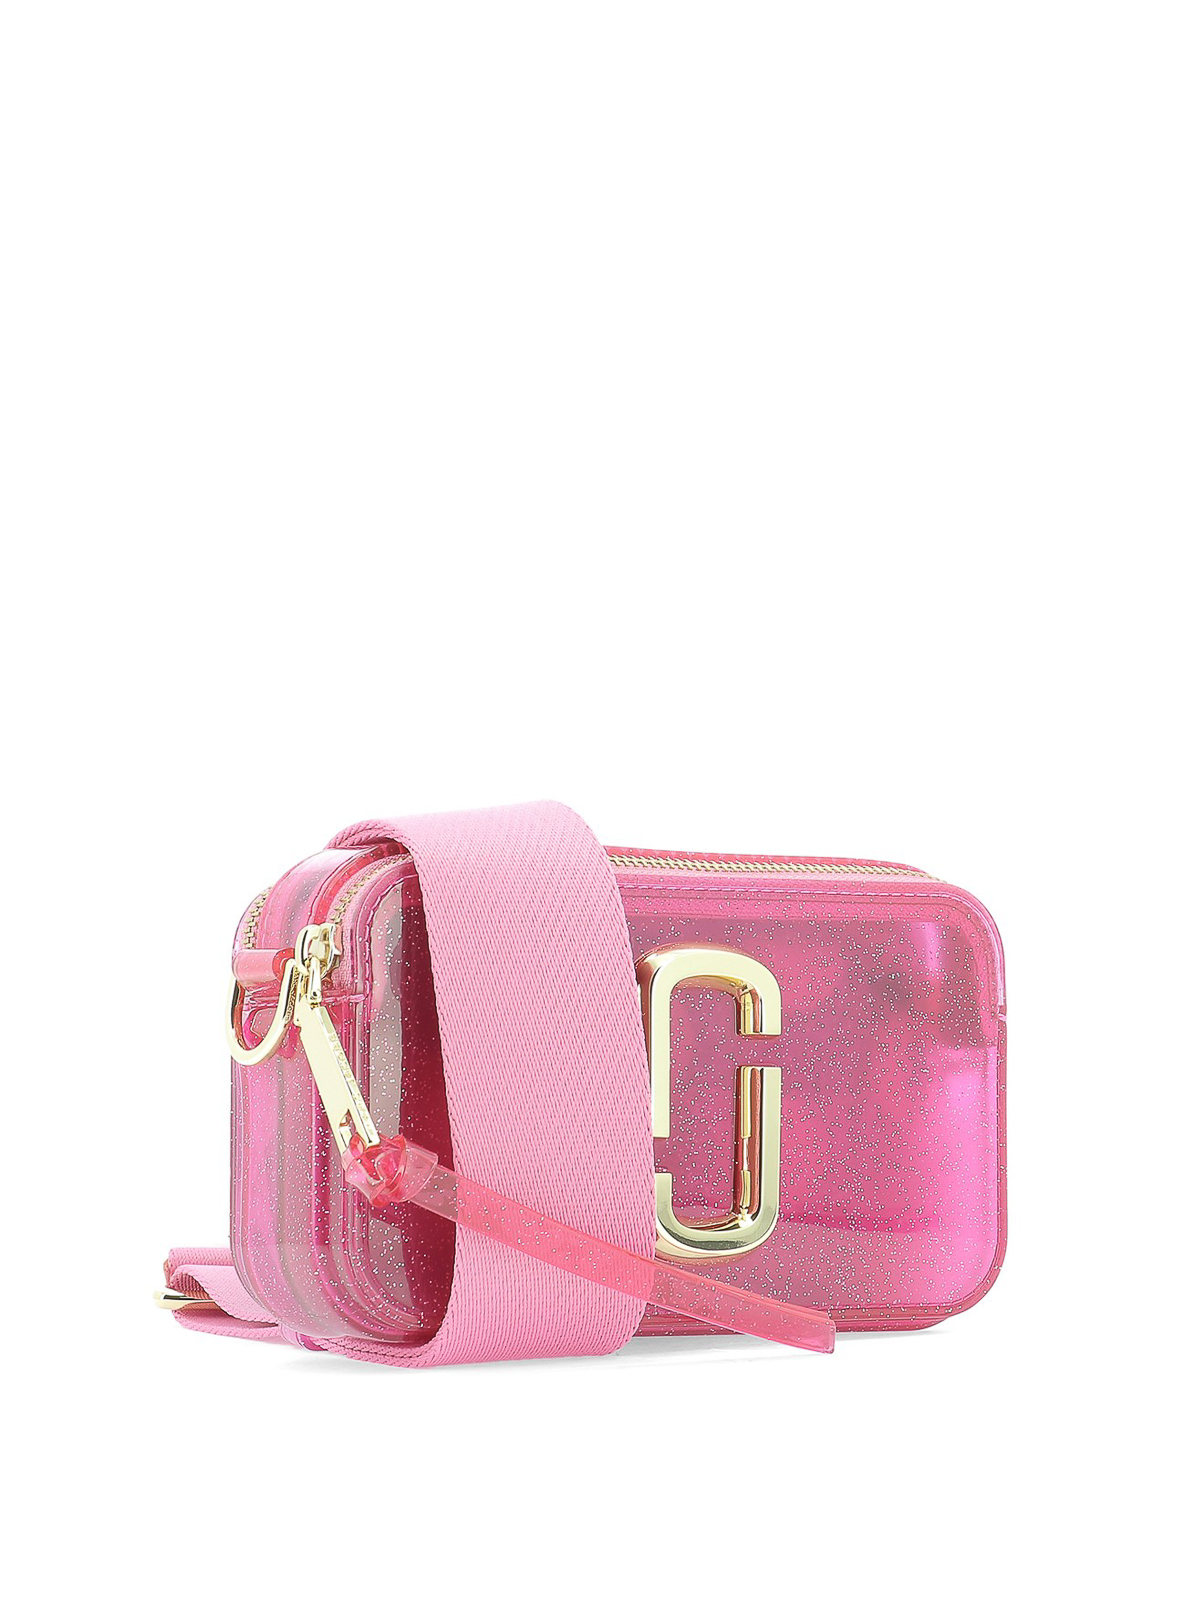 Sell Marc Jacobs Snapshot Camera Bag - Pink